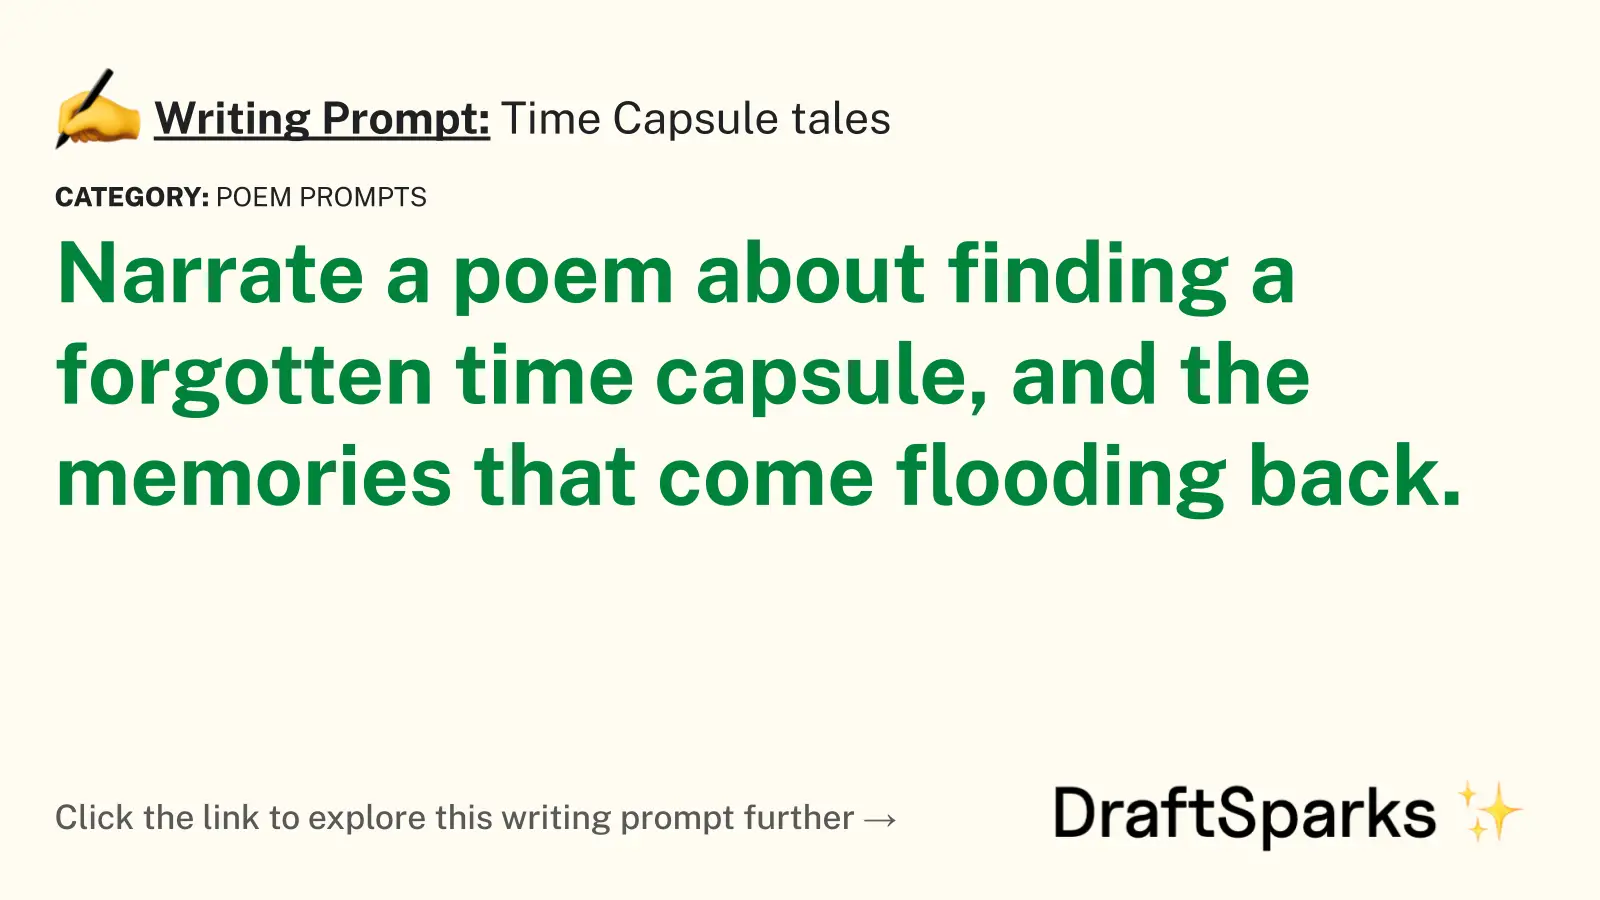 Time Capsule tales